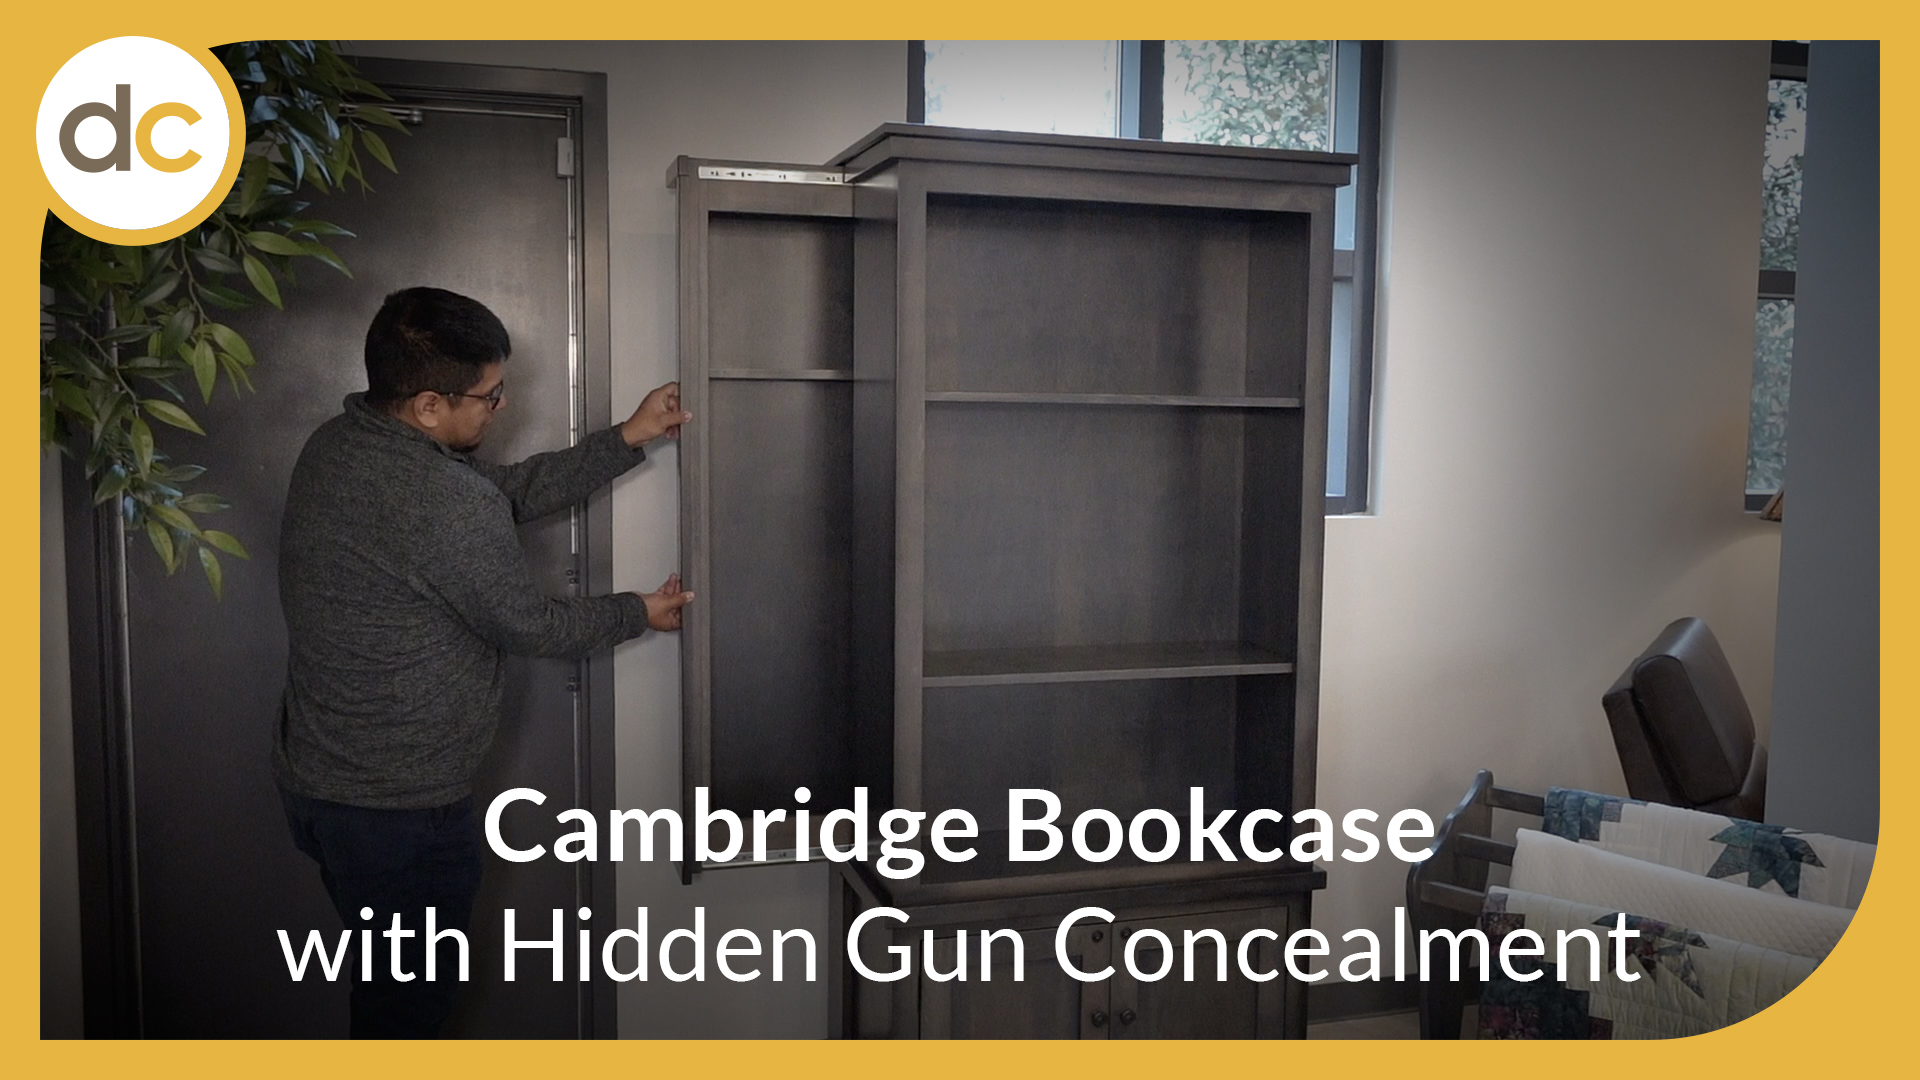 Hidden gun storage is opened while a title says, "Cambridge Bookcase with Hidden Gun Concealment